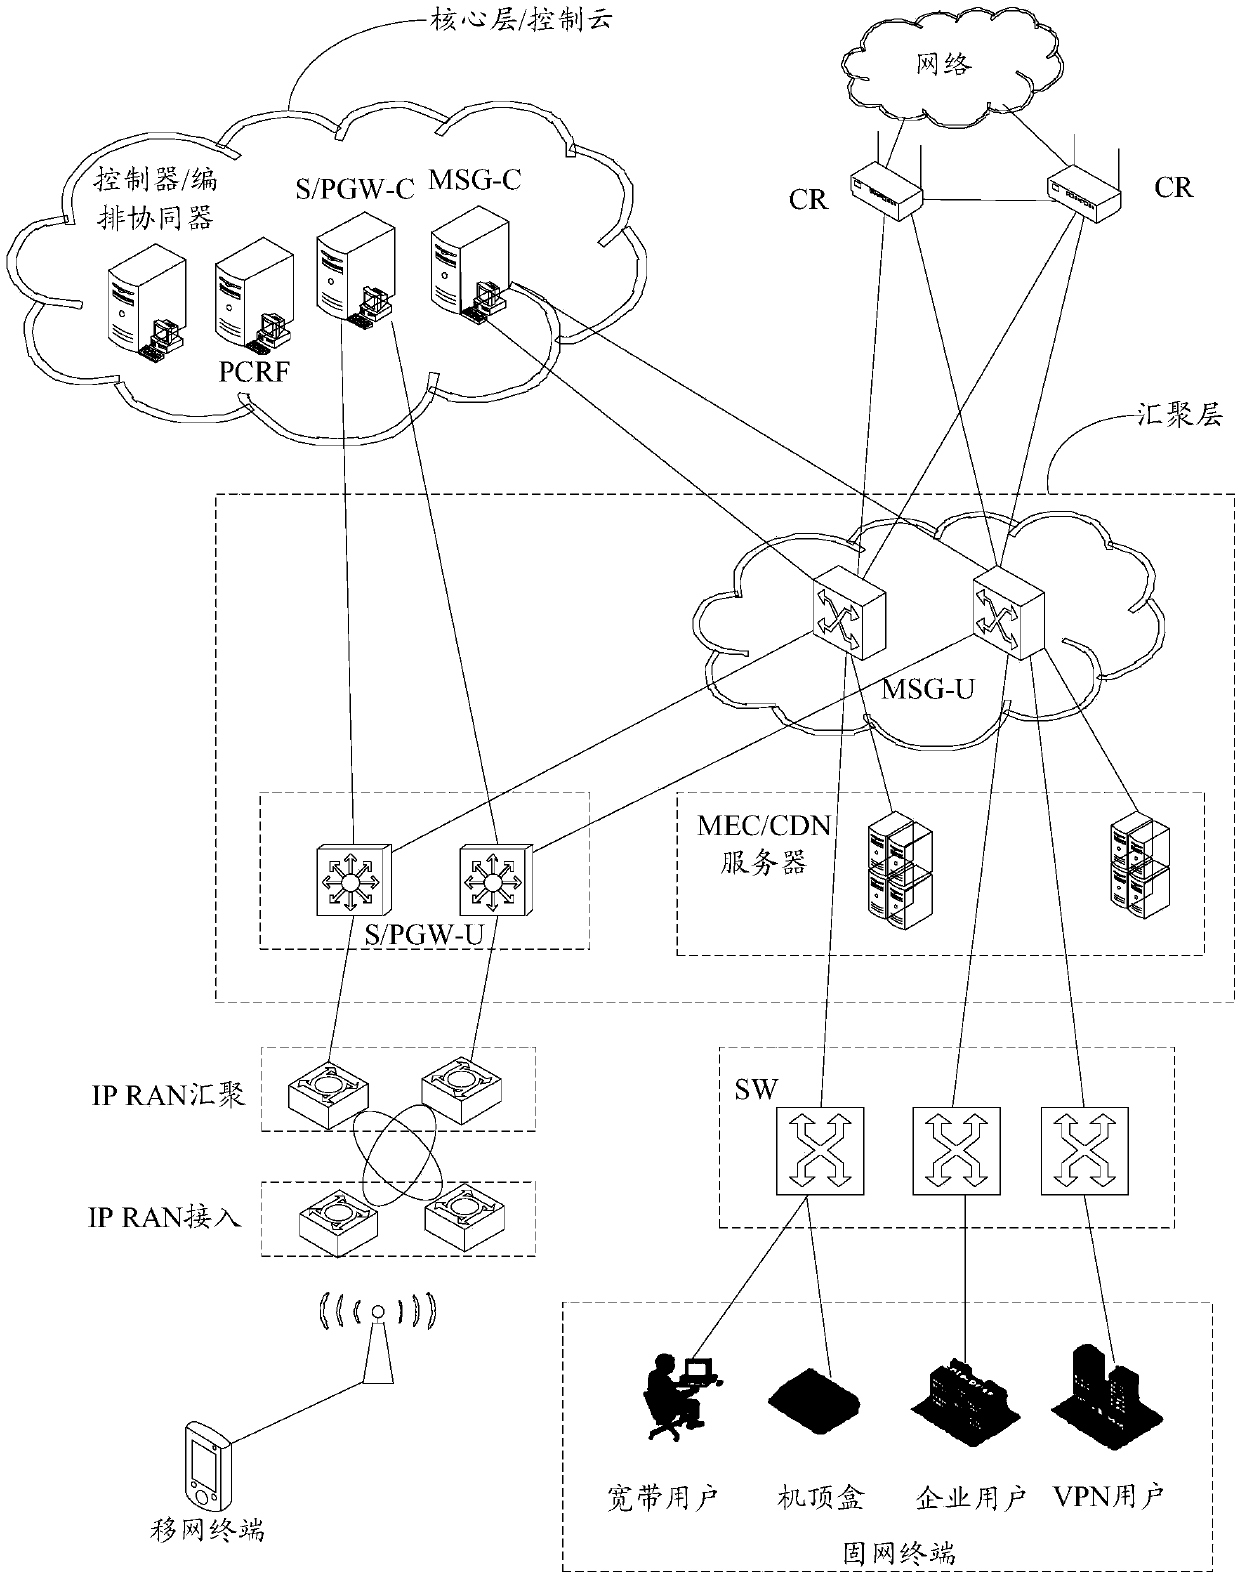 Multi-service MEC network architecture, multi-service data stream processing method and device